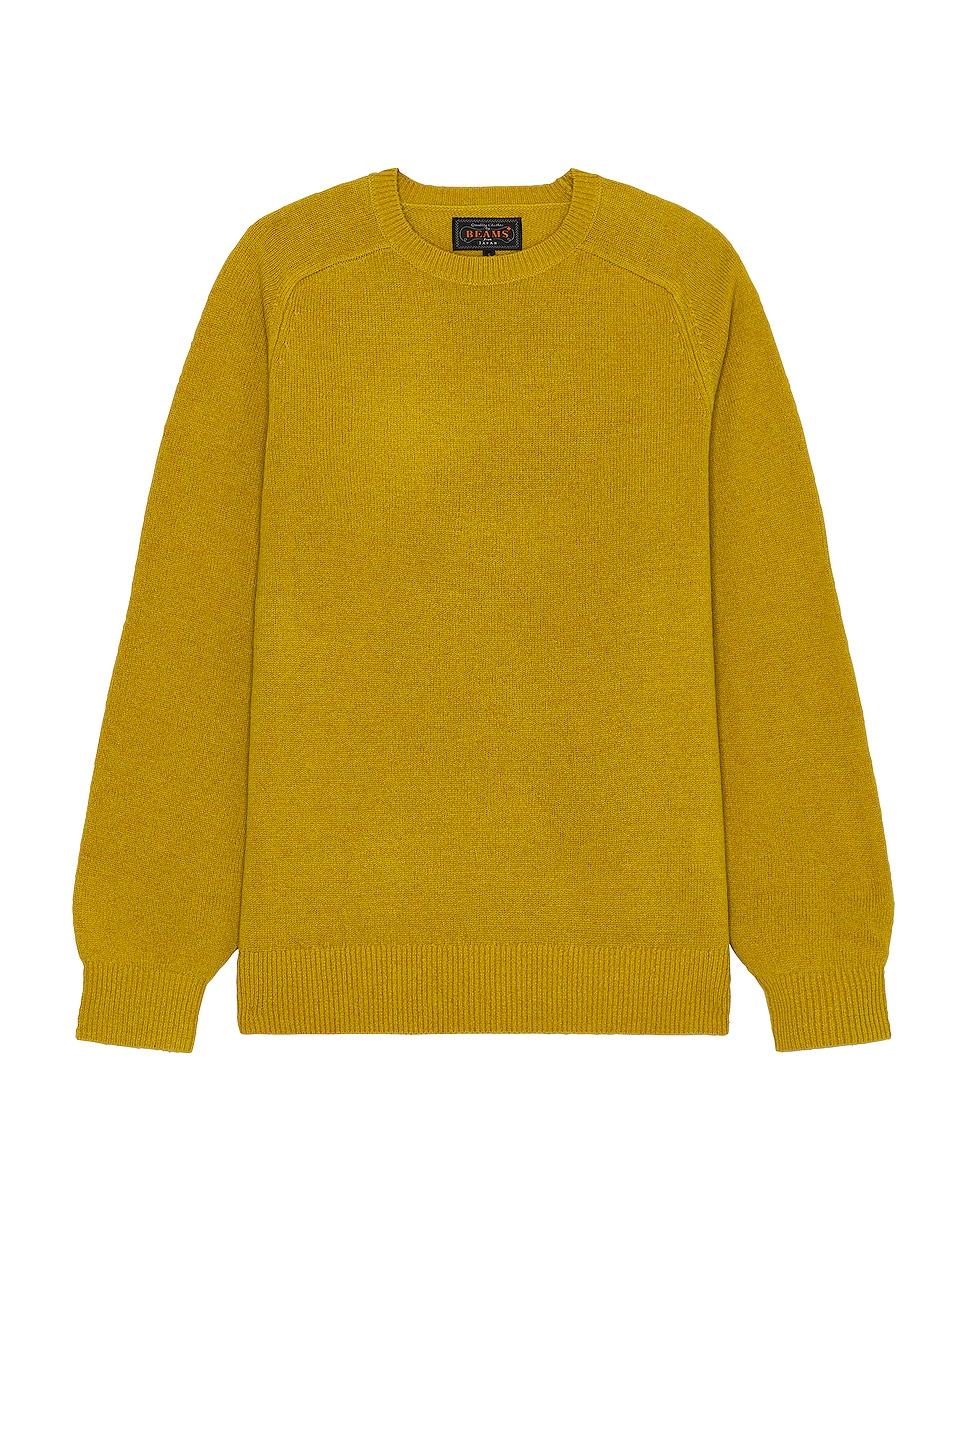 Sweater in Mustard